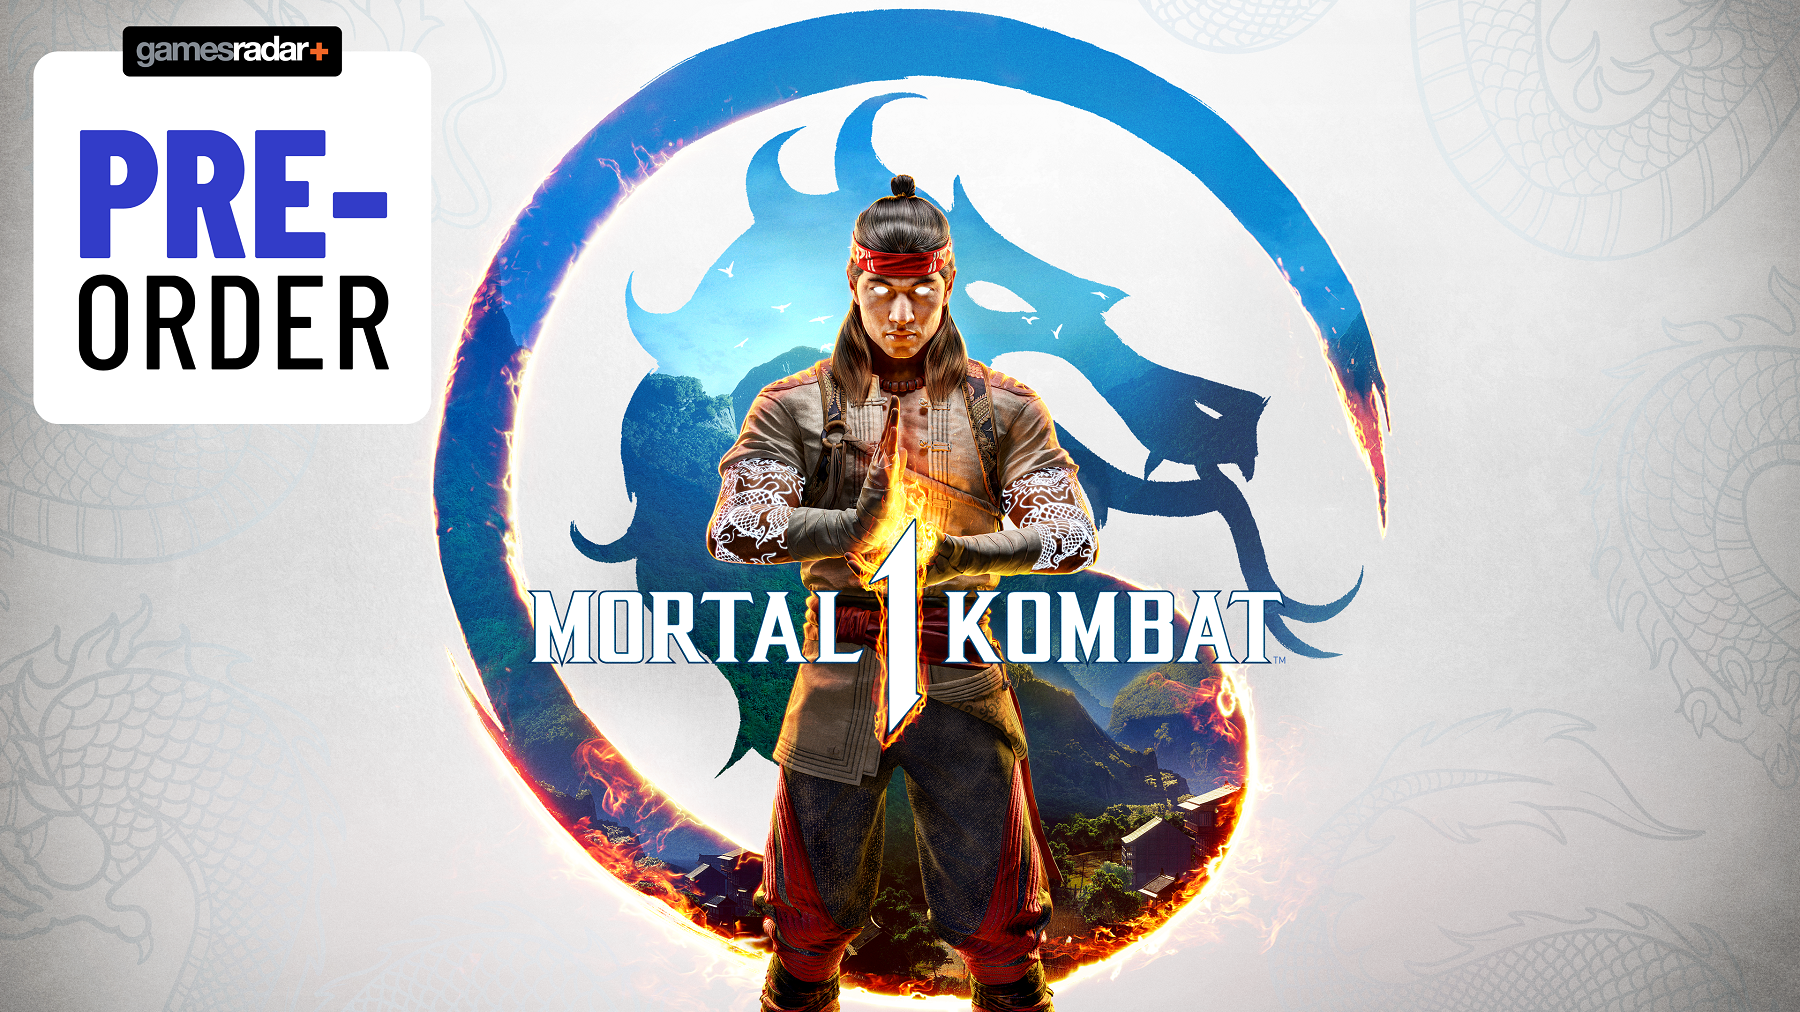 Mortal Kombat 1 Kollectors Edition, PlayStation 5 